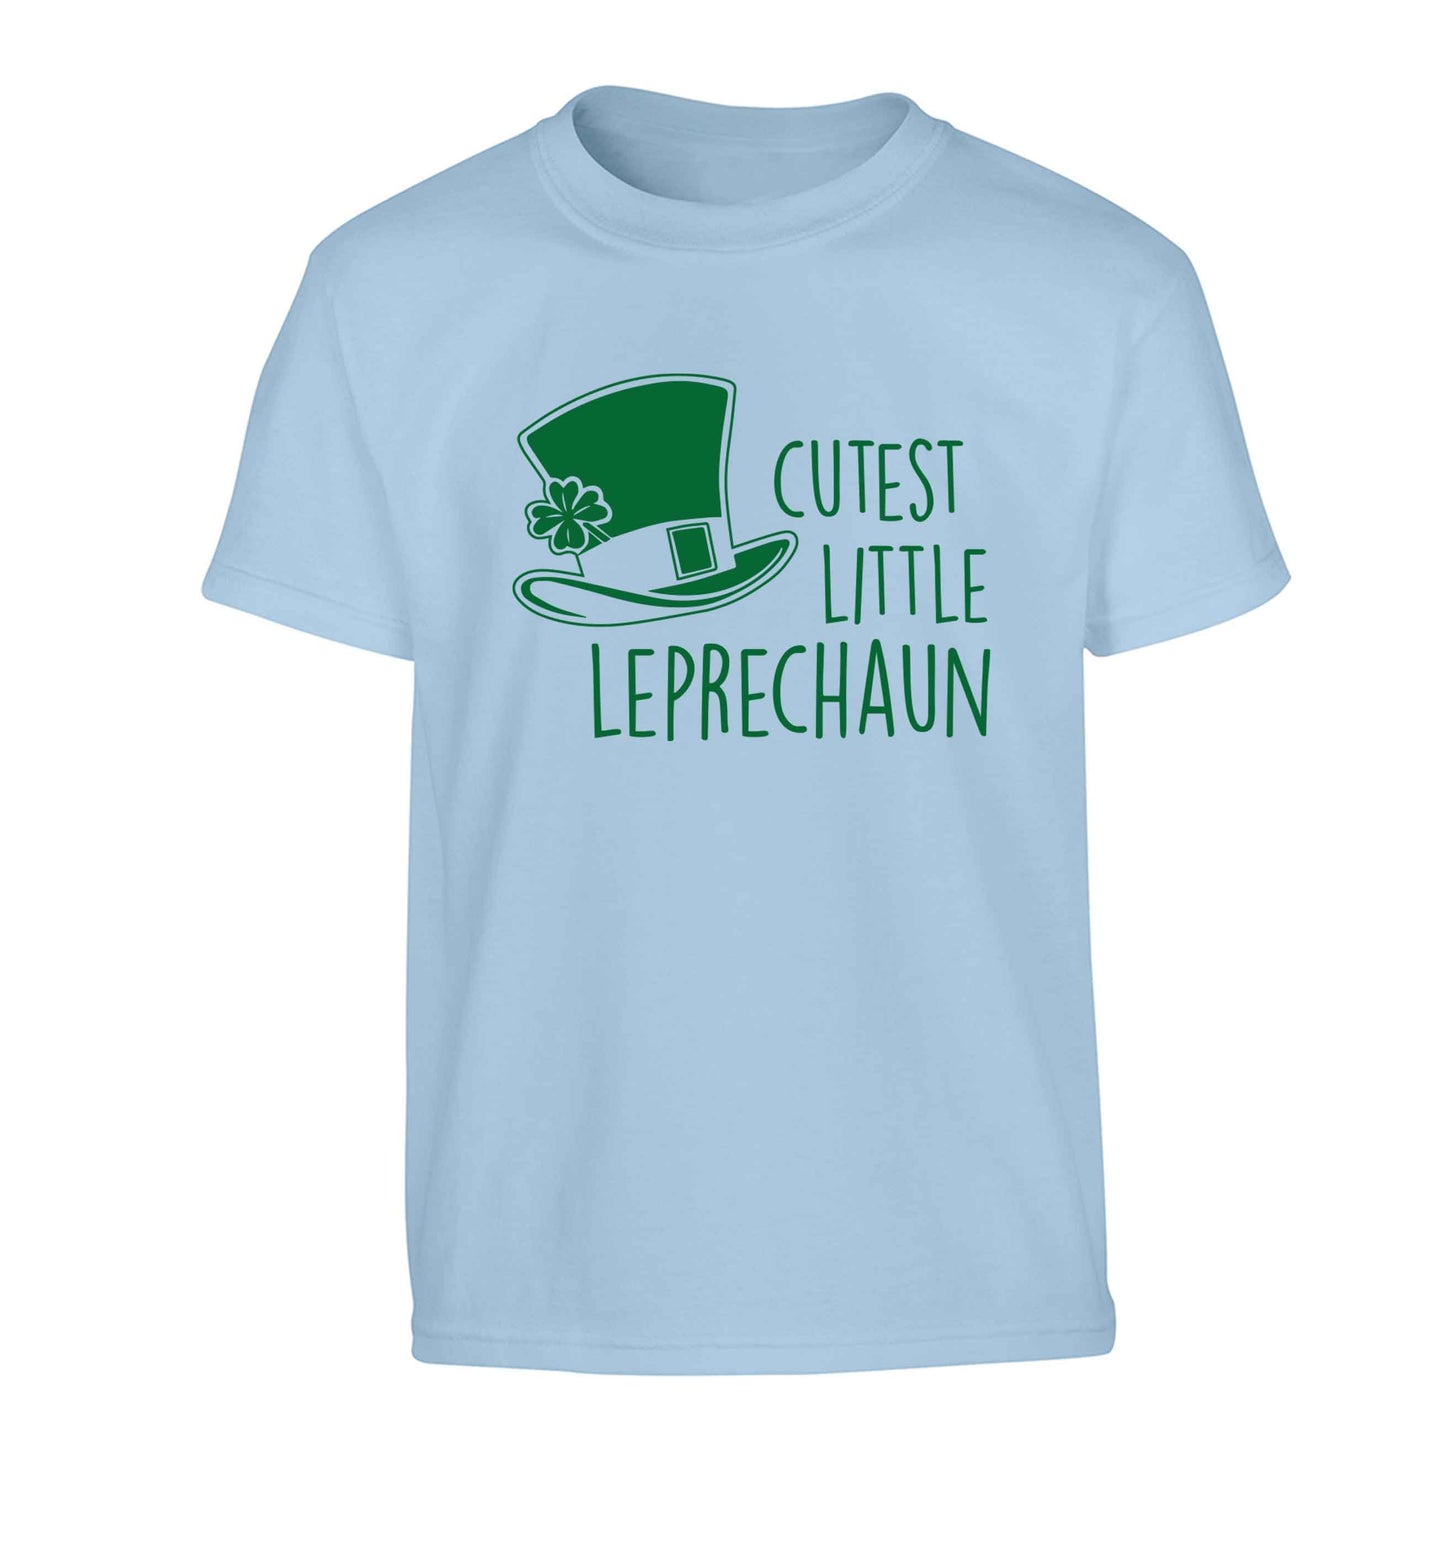 Cutest little leprechaun Children's light blue Tshirt 12-13 Years